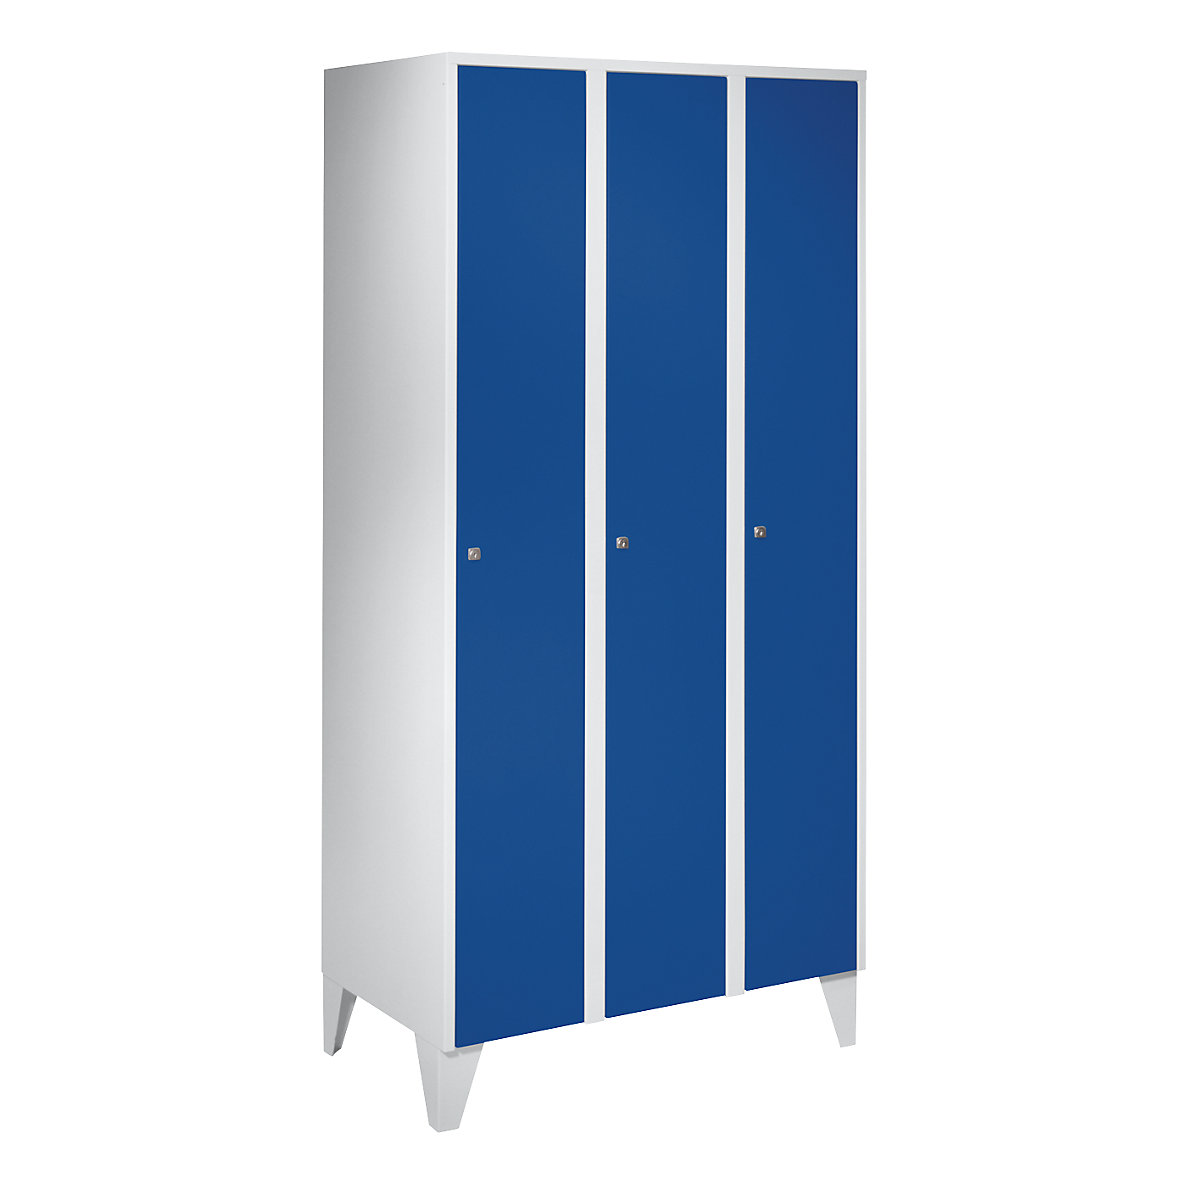 Cloakroom locker with feet – Wolf, HxWxD 1850 x 900 x 500 mm, 3 compartments, gentian blue-6